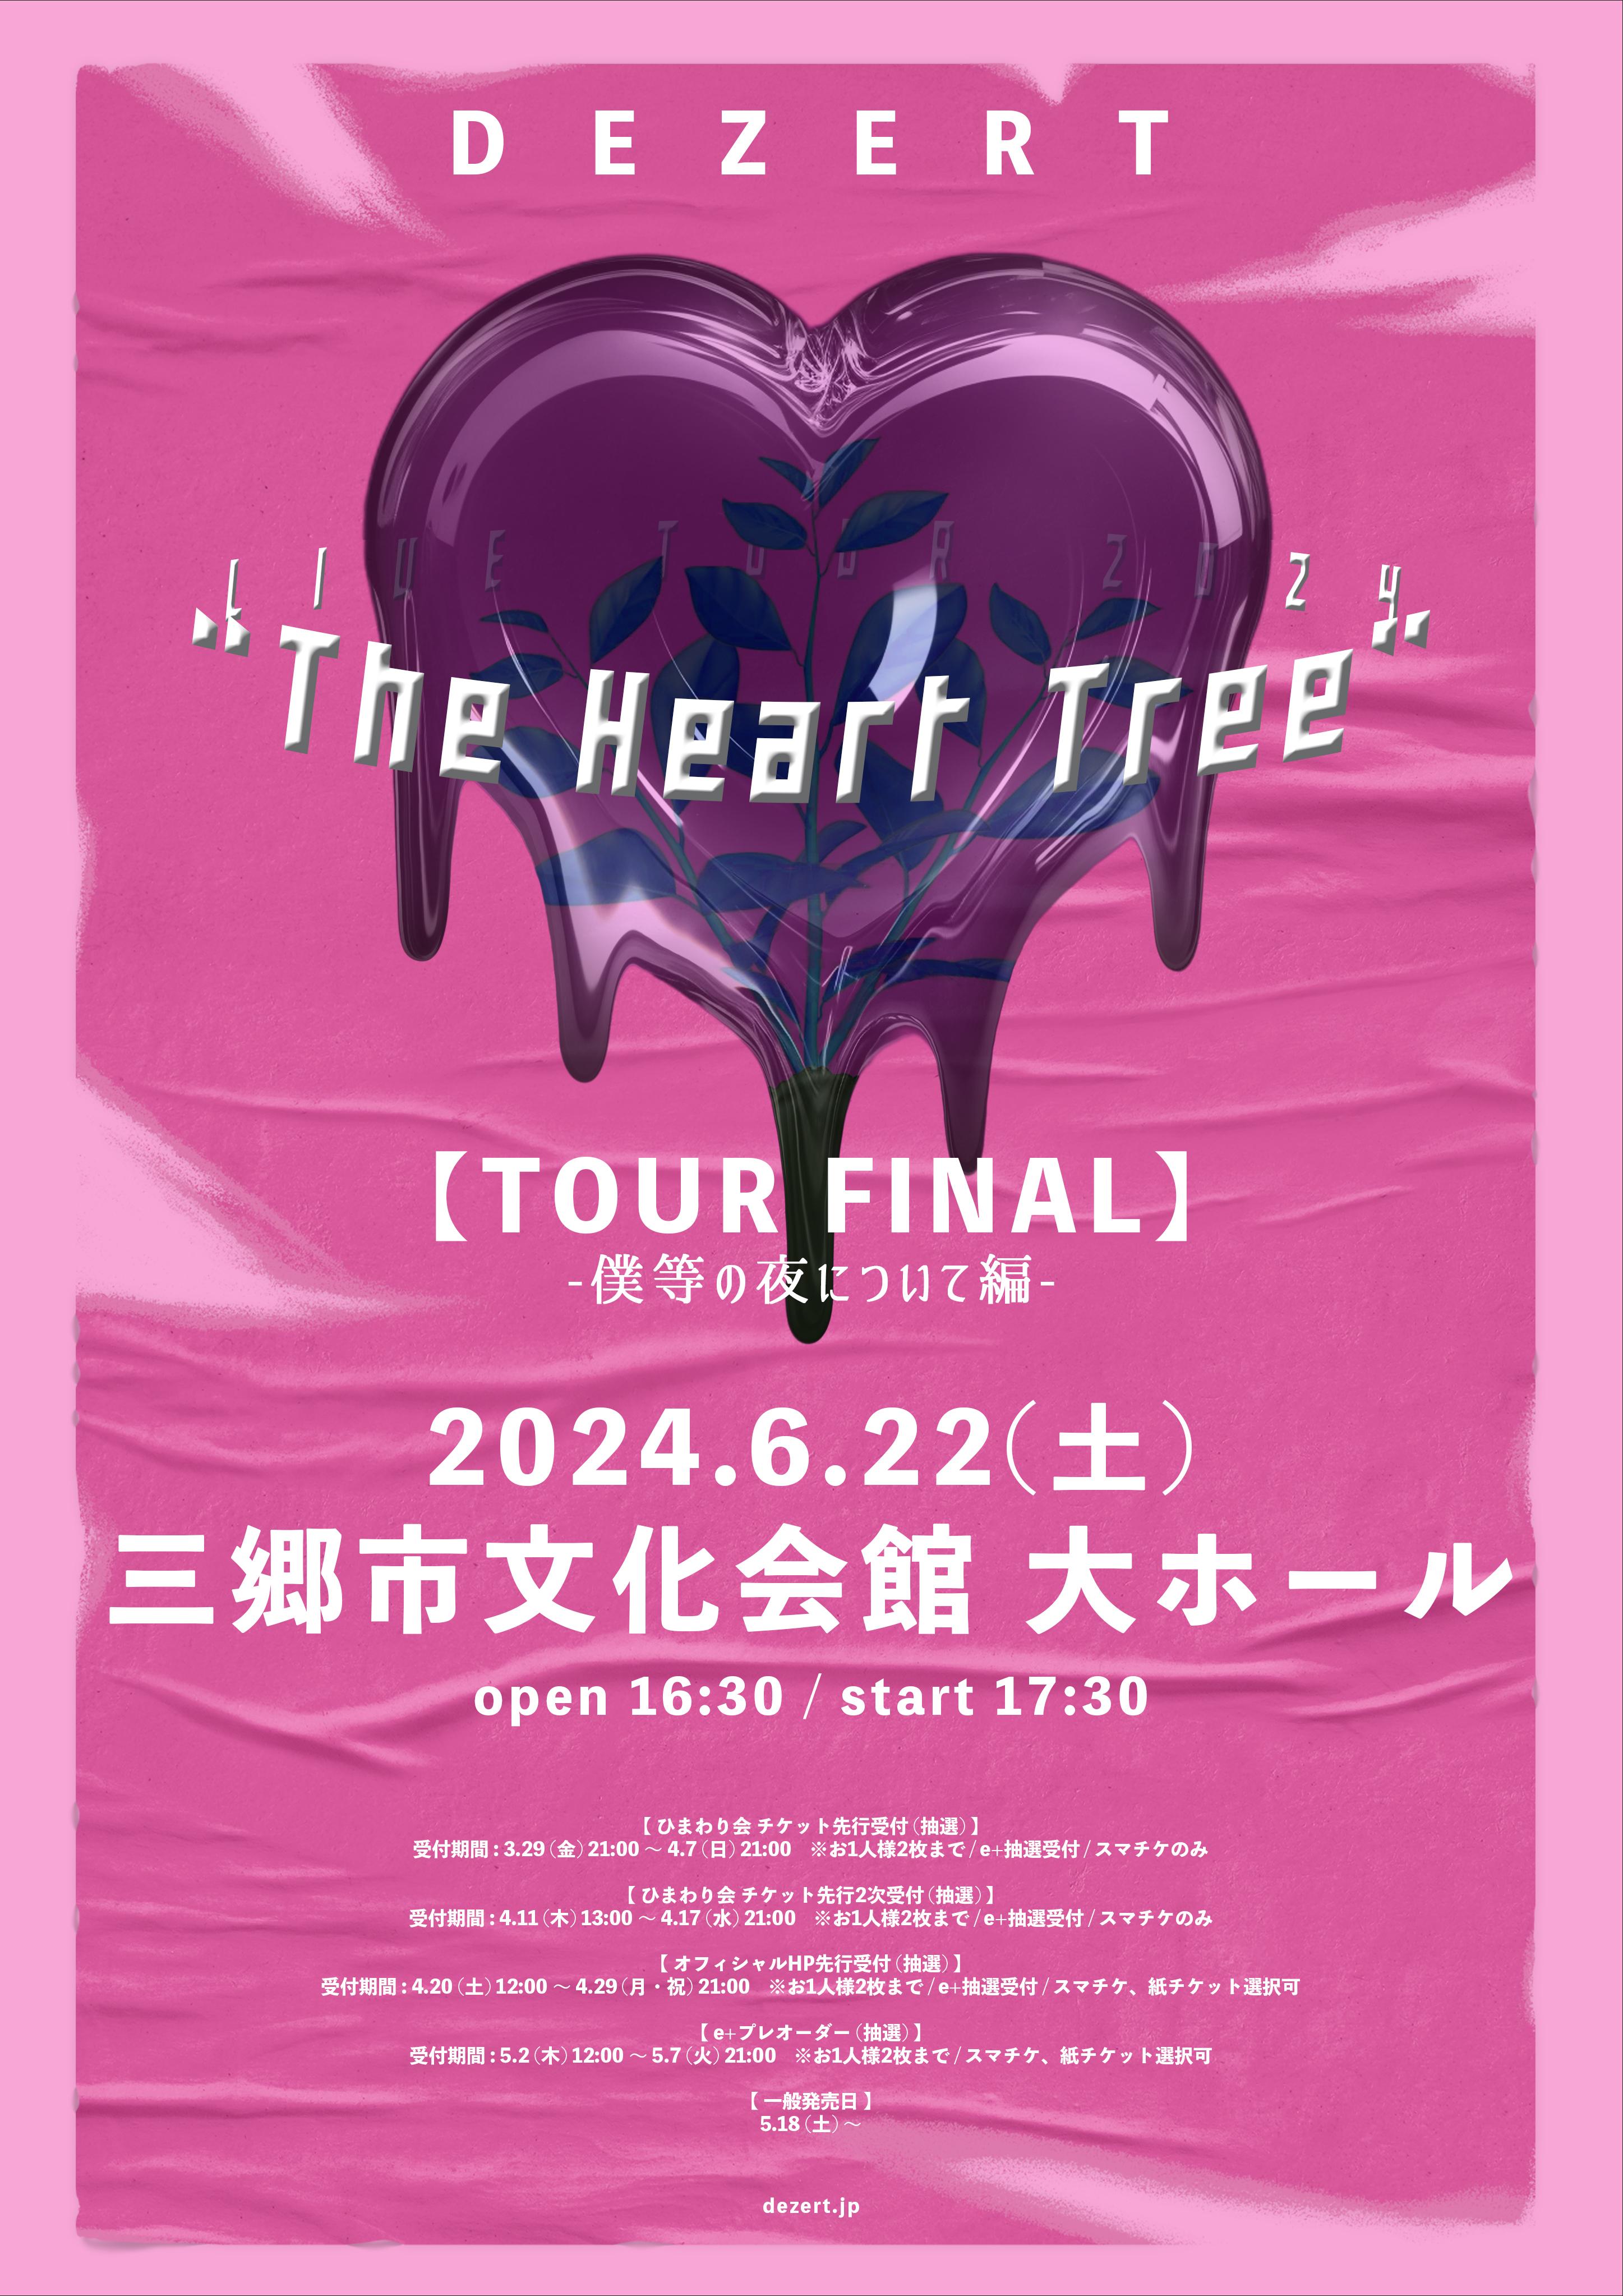 DEZERT LIVE TOUR 2024 “The Heart Tree” 【TOUR FINAL】 -僕等の夜について編-<br>ひまわり会(FC)先行受付開始！